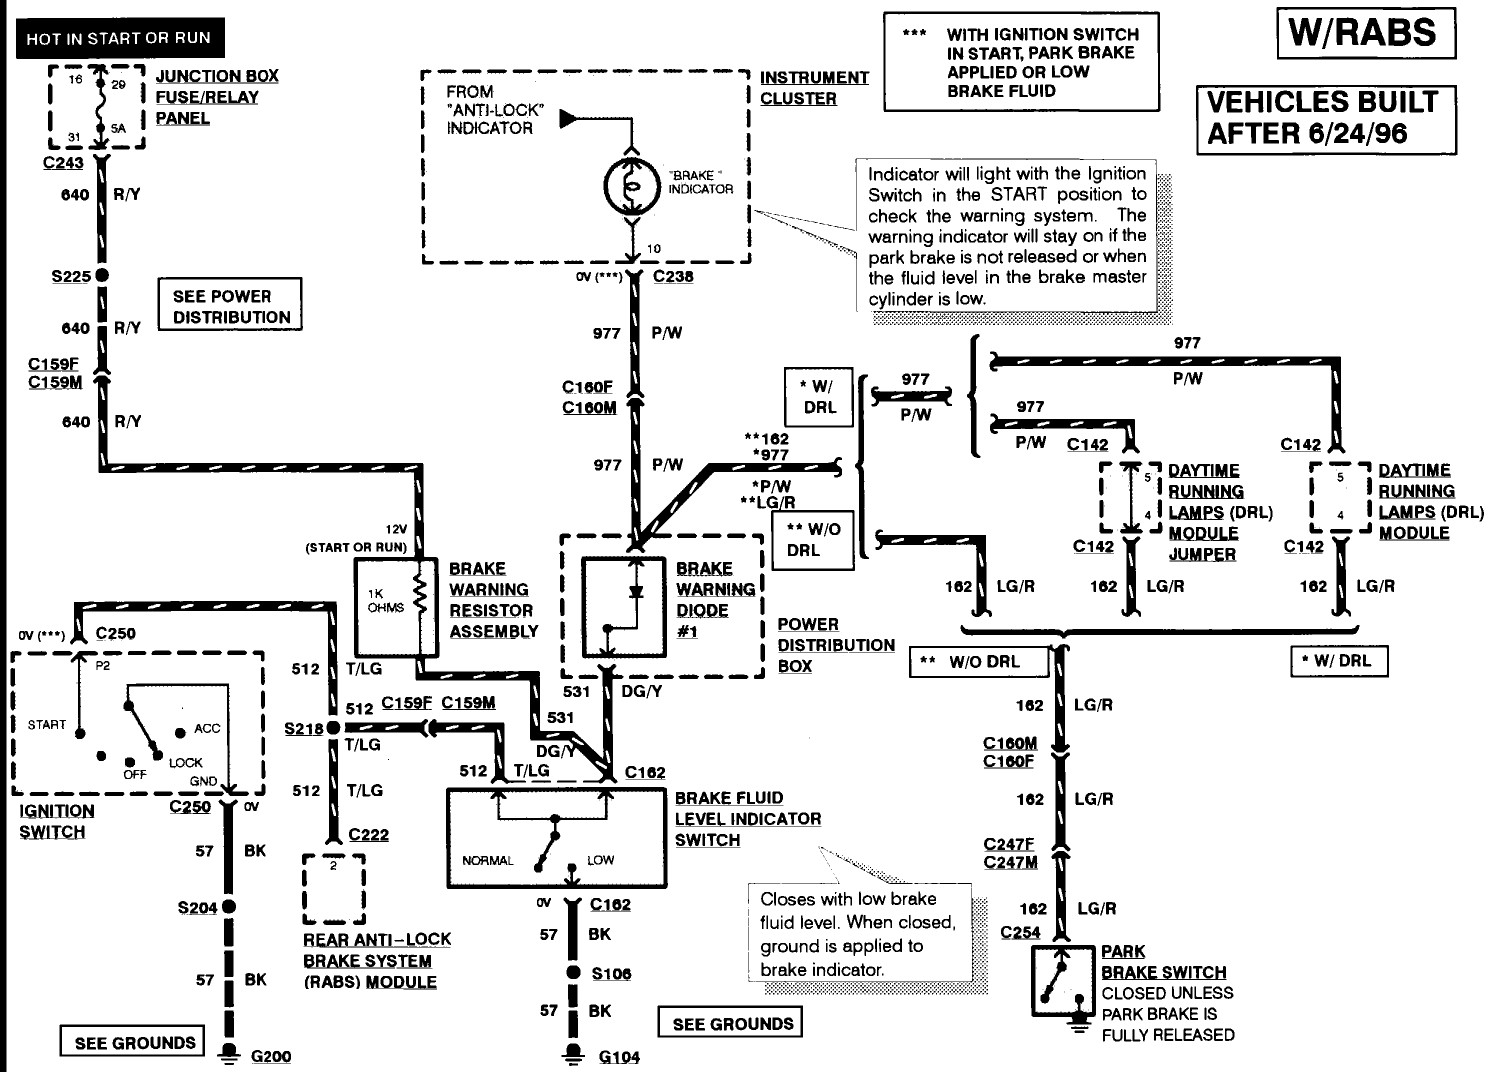 1997 Ford Wiring Diagram Wiring Diagram 1995 Ford F 350 Wiring Diagram 1997 Ford F 350 Wiring Diagram